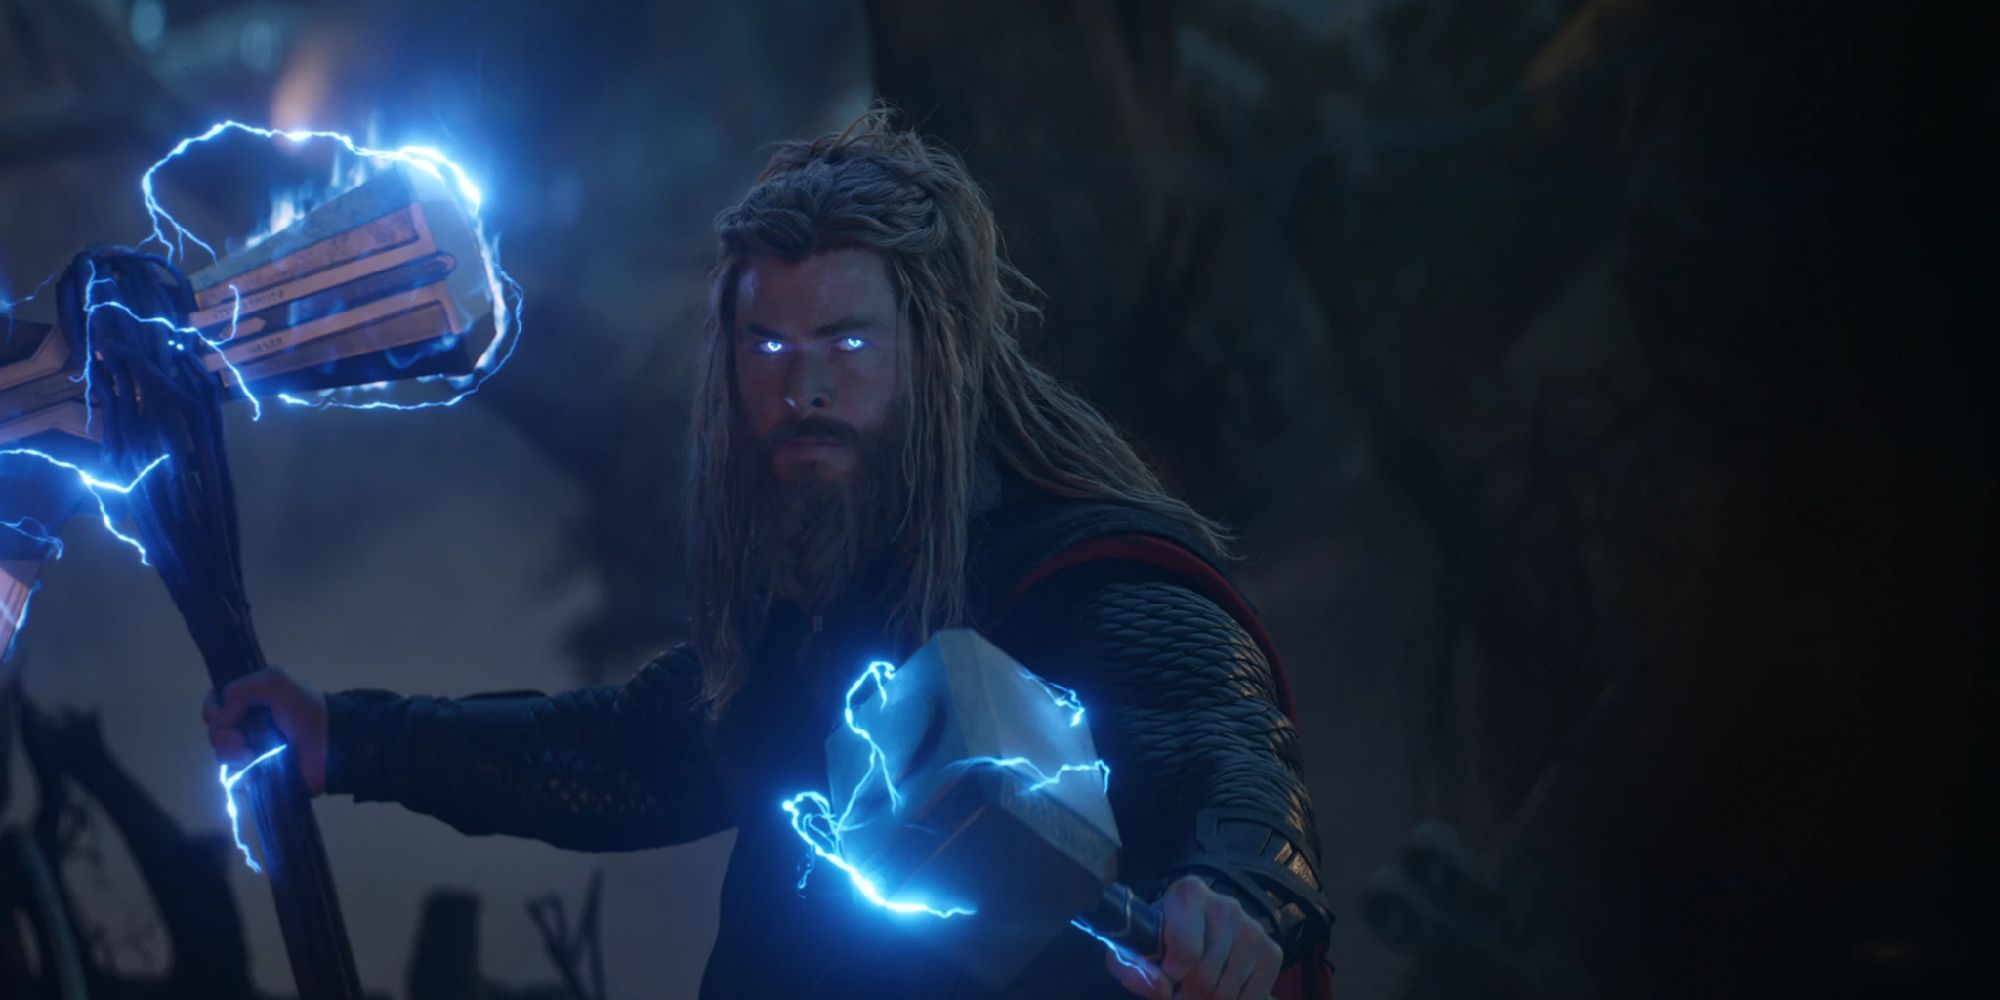 MCU Thor wielding Mjolnir and Strombreaker